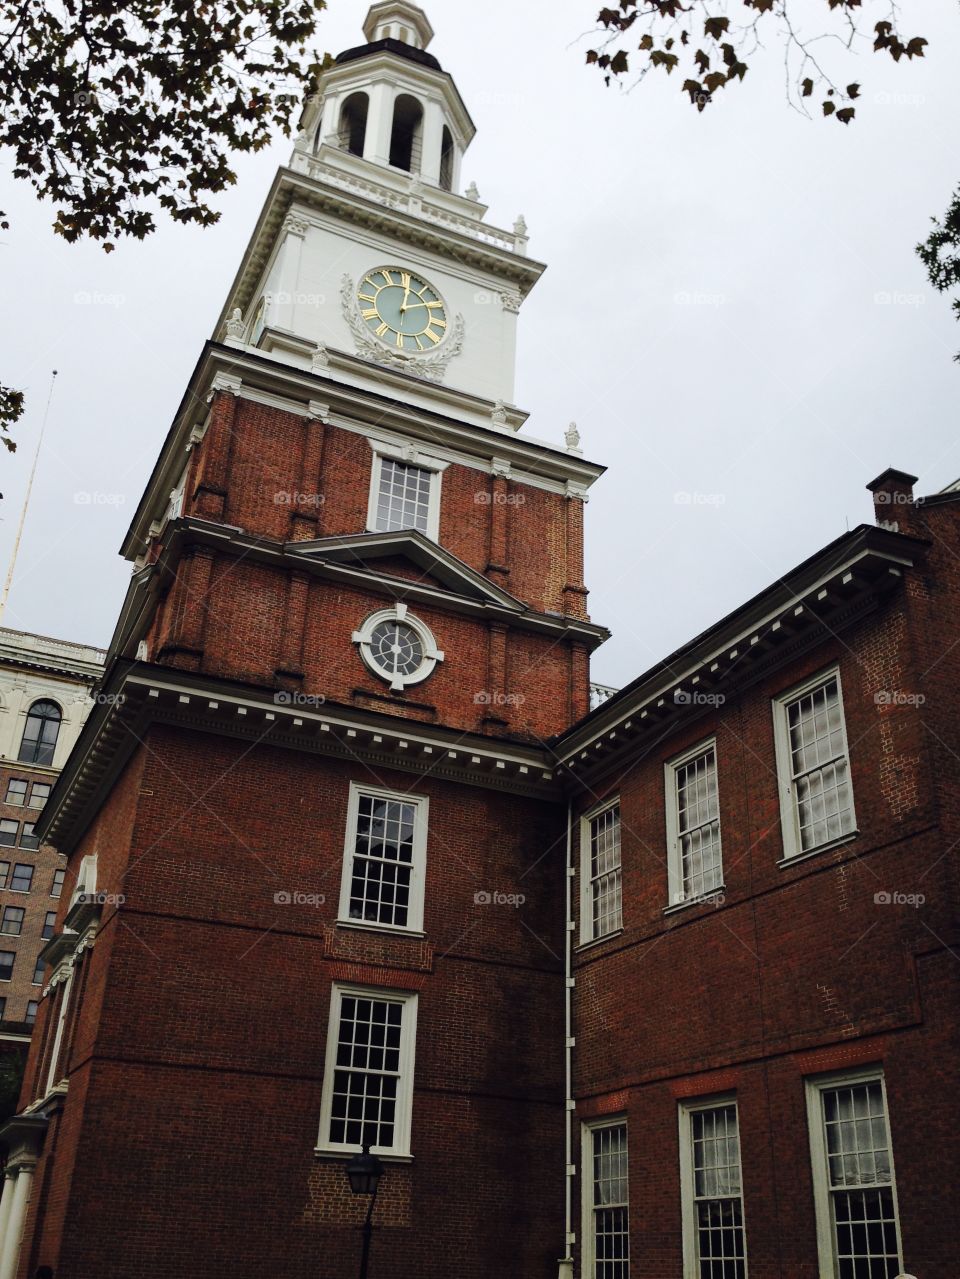 Trip to Philadelphia! Historic buildings all around! Independence Hall